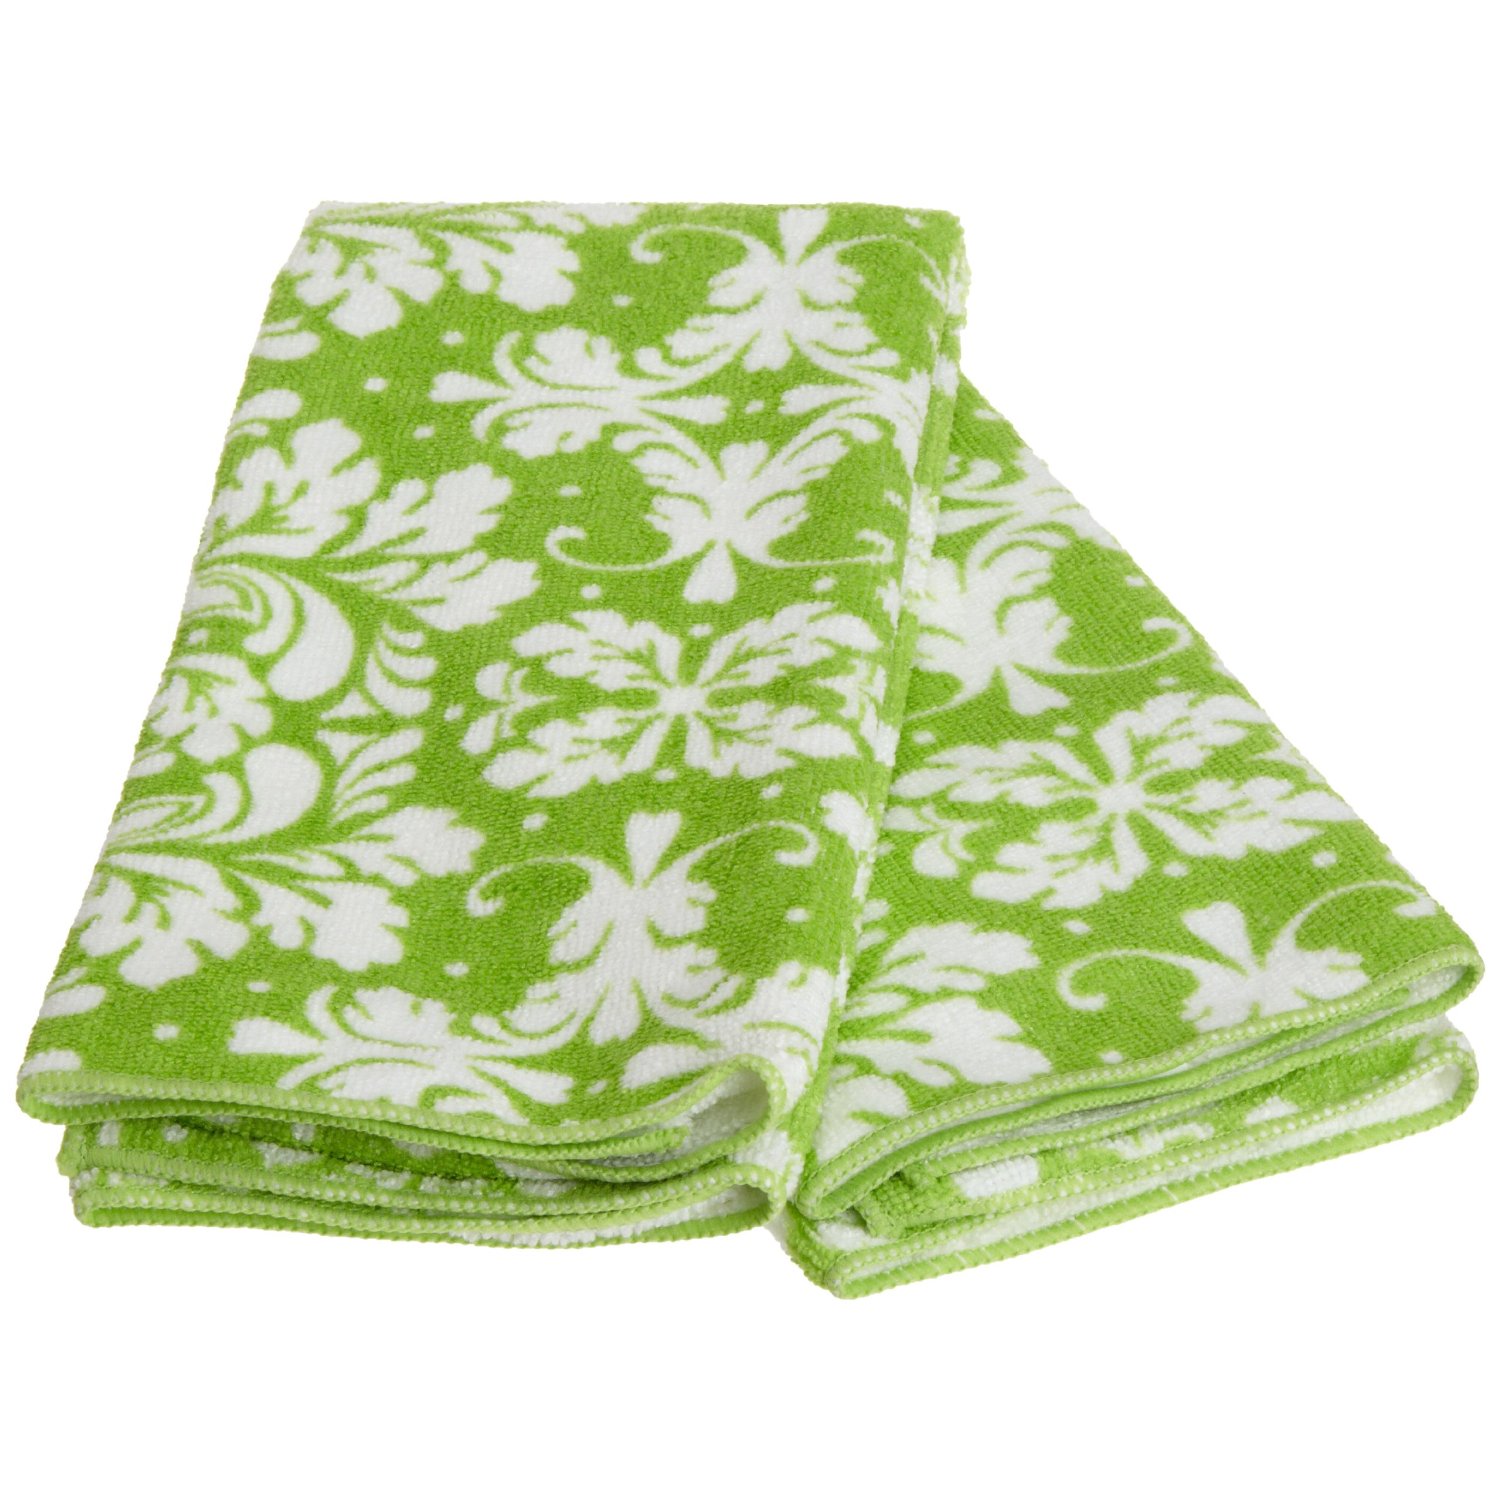 Green damask towels